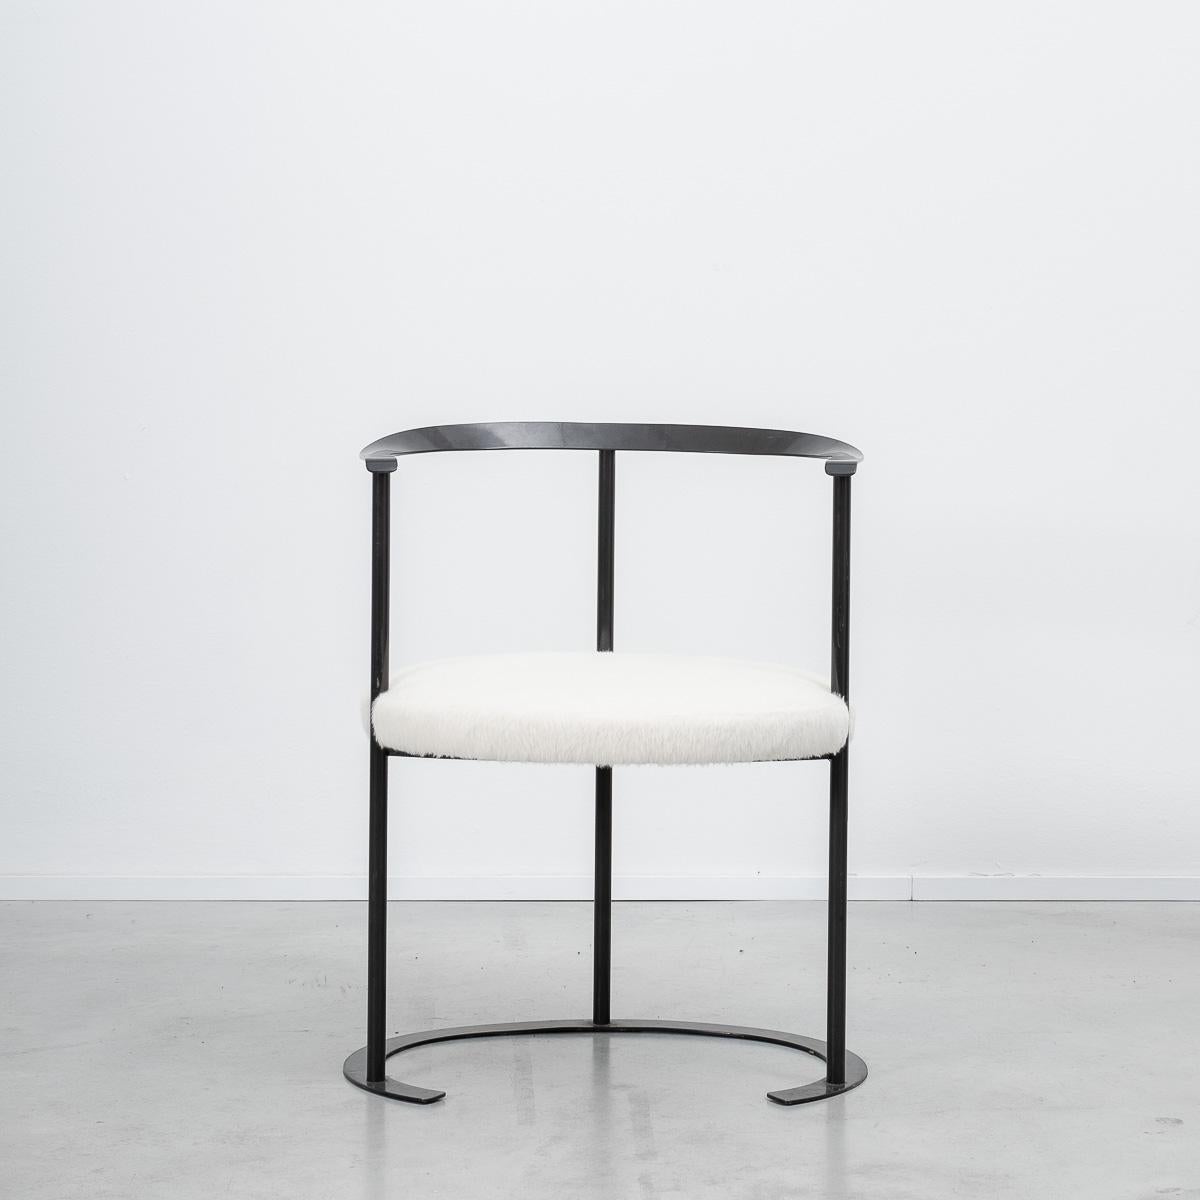 Mid-Century Modern Luigi Caccia Dominioni Catalina Chairs